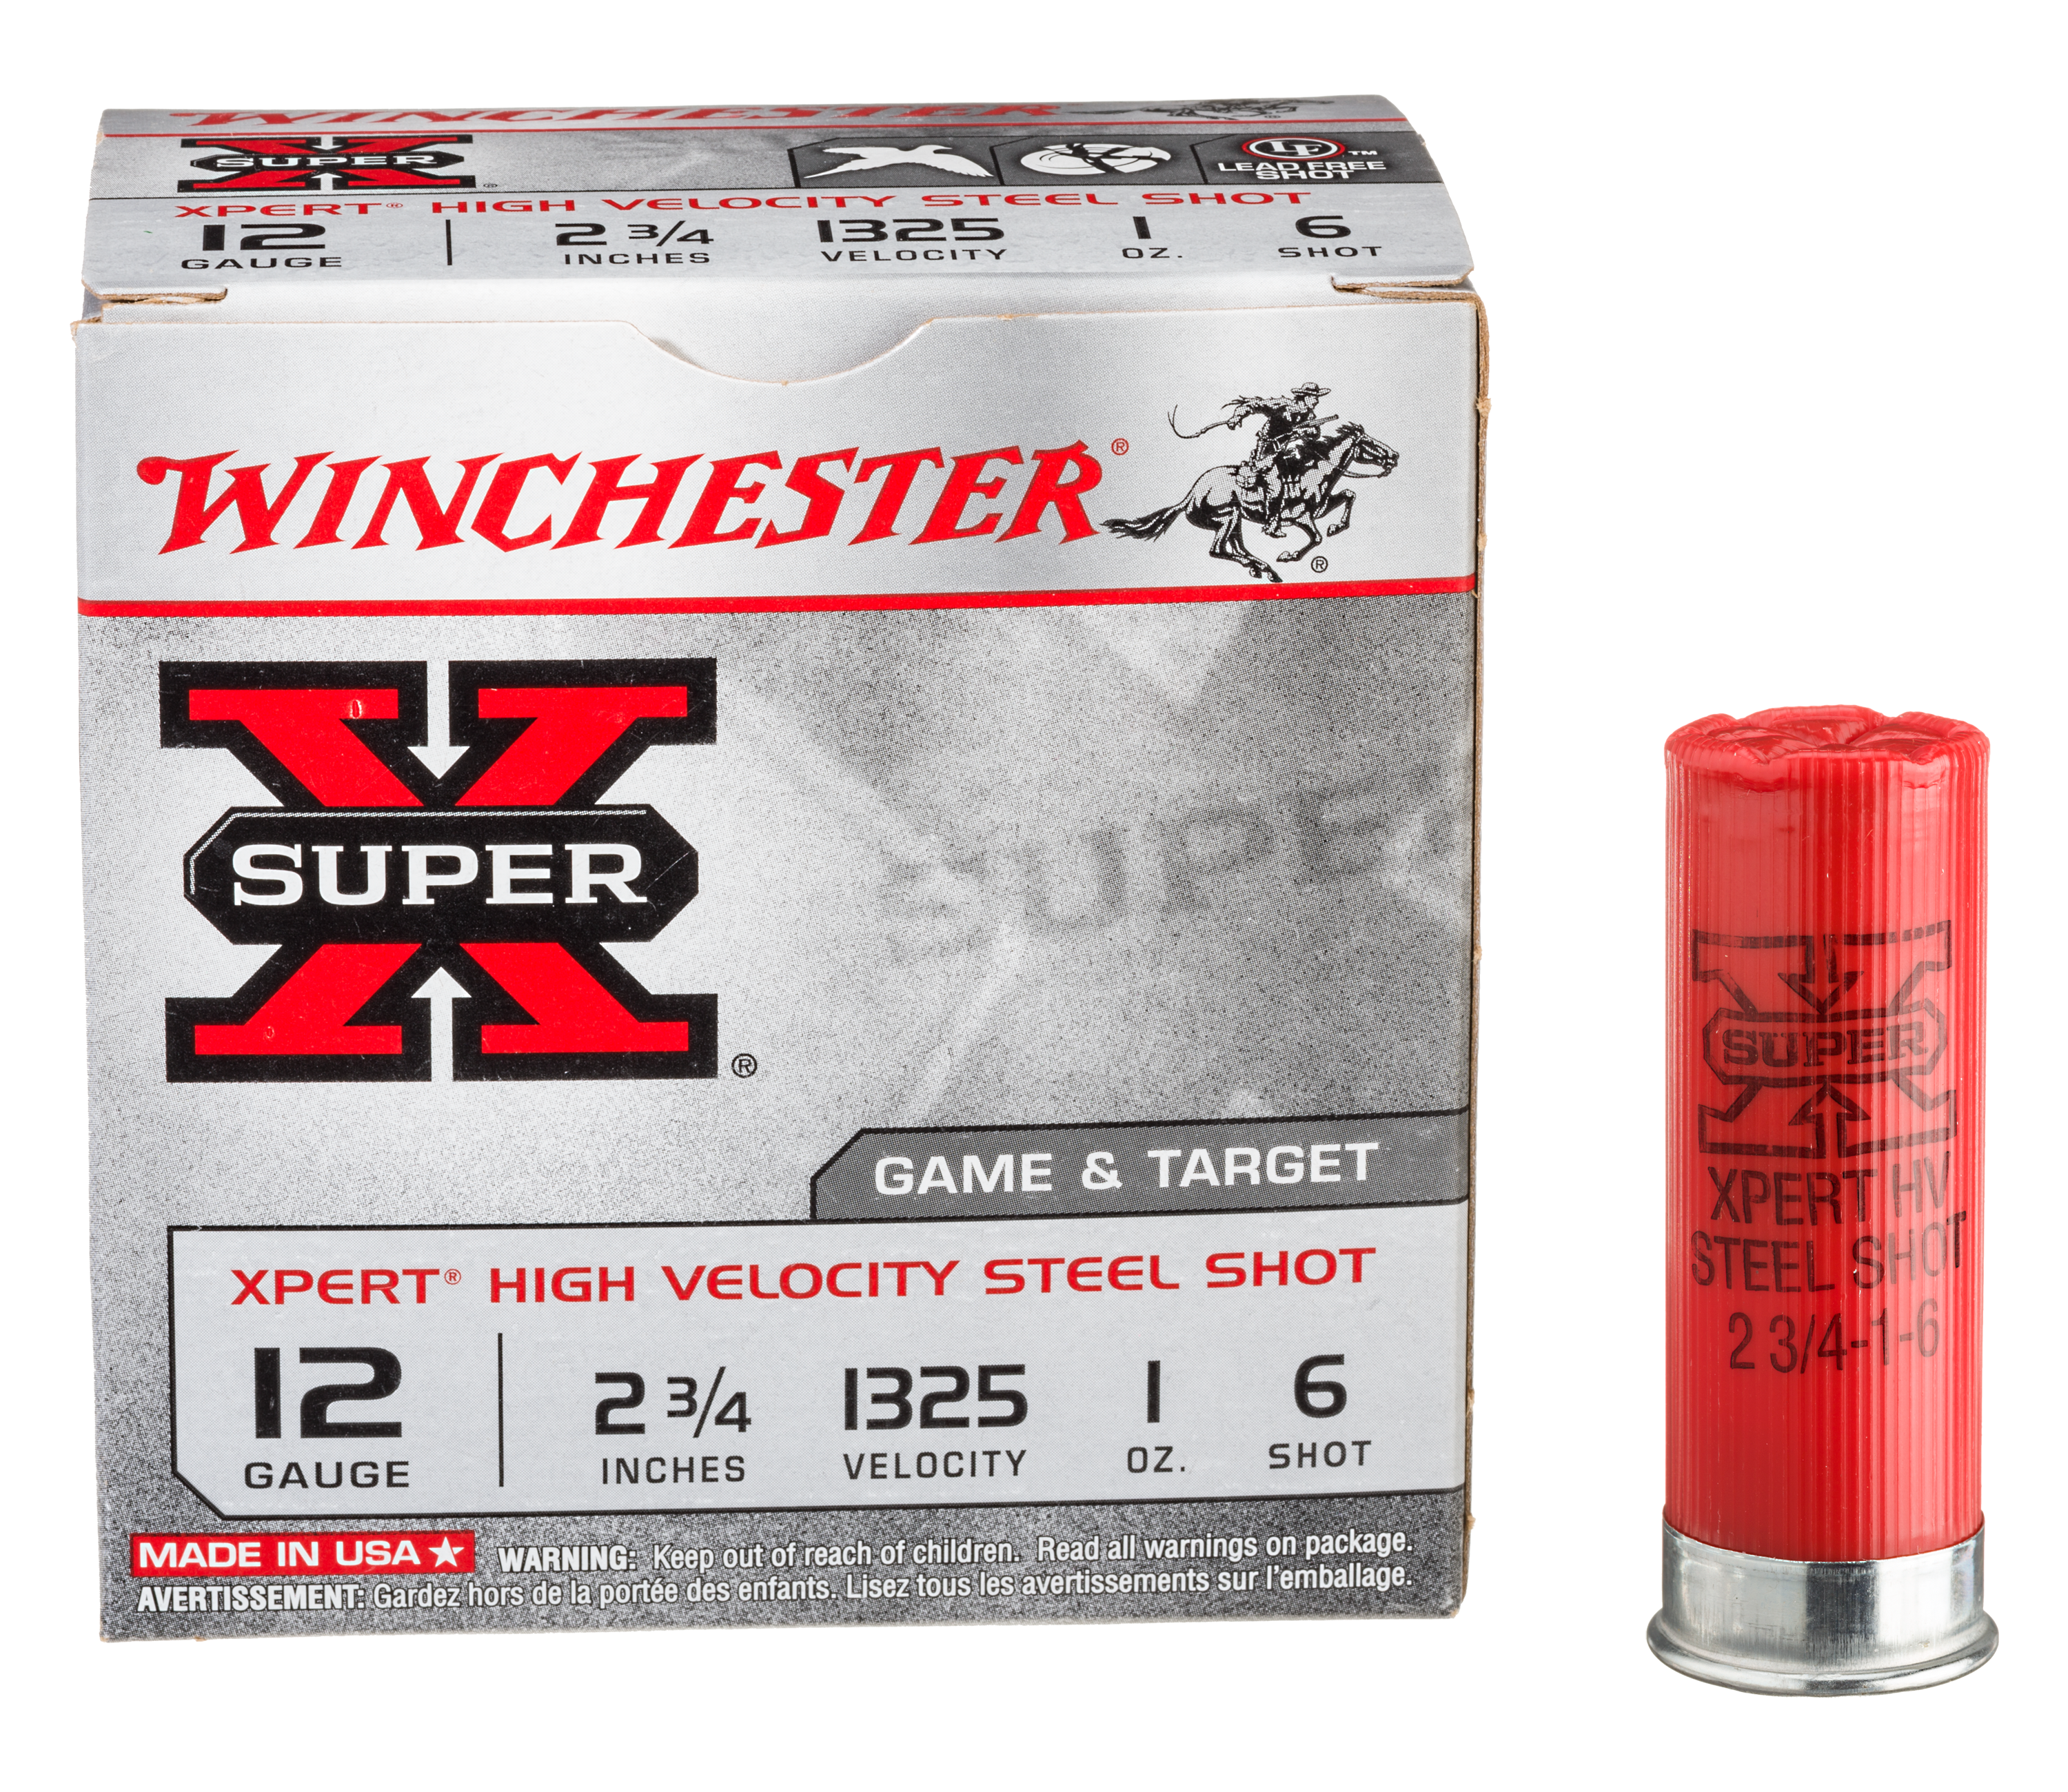 Winchester Xpert Hi-Velocity Game and Target Steel Shotshells - 20 Gauge - #6 Shot - 250 rounds